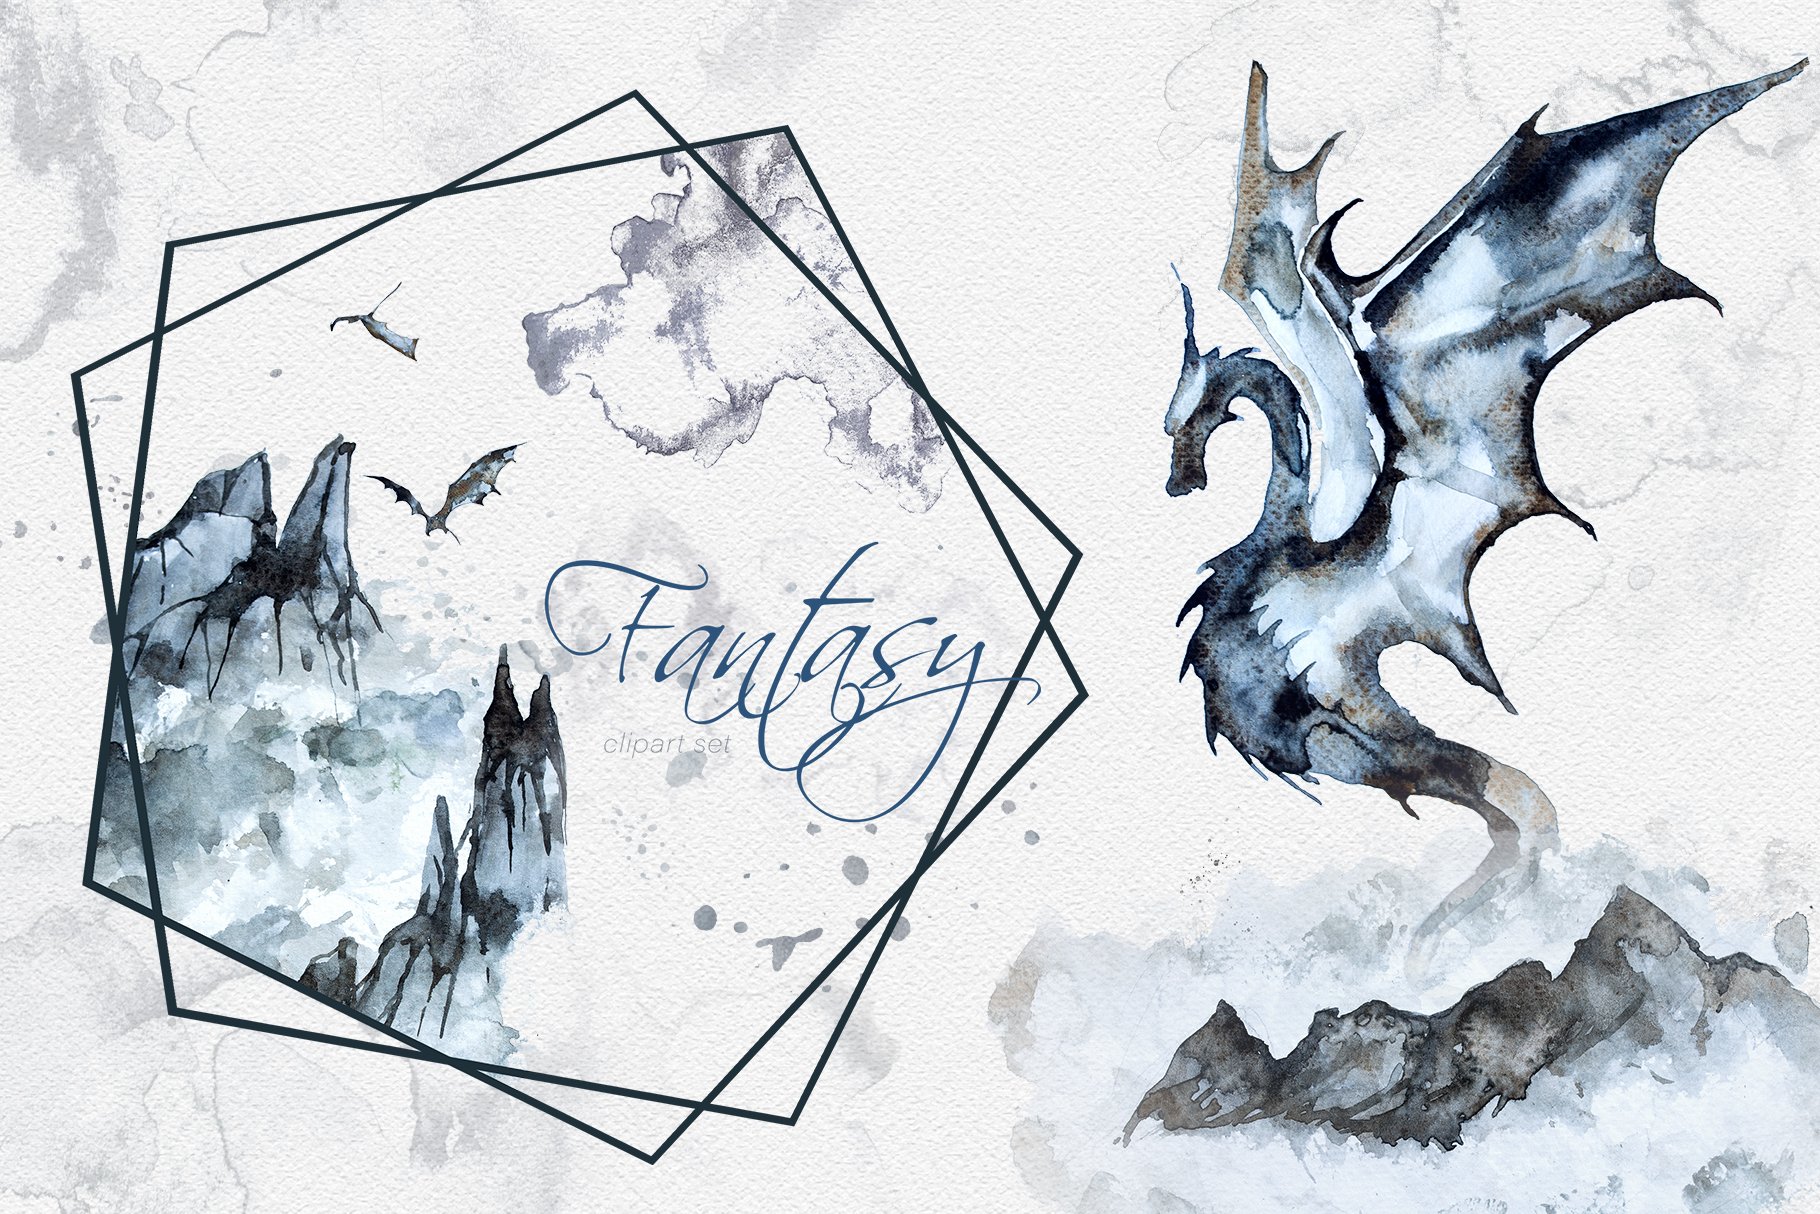 Watercolor Fantasy Clipart Set cover image.